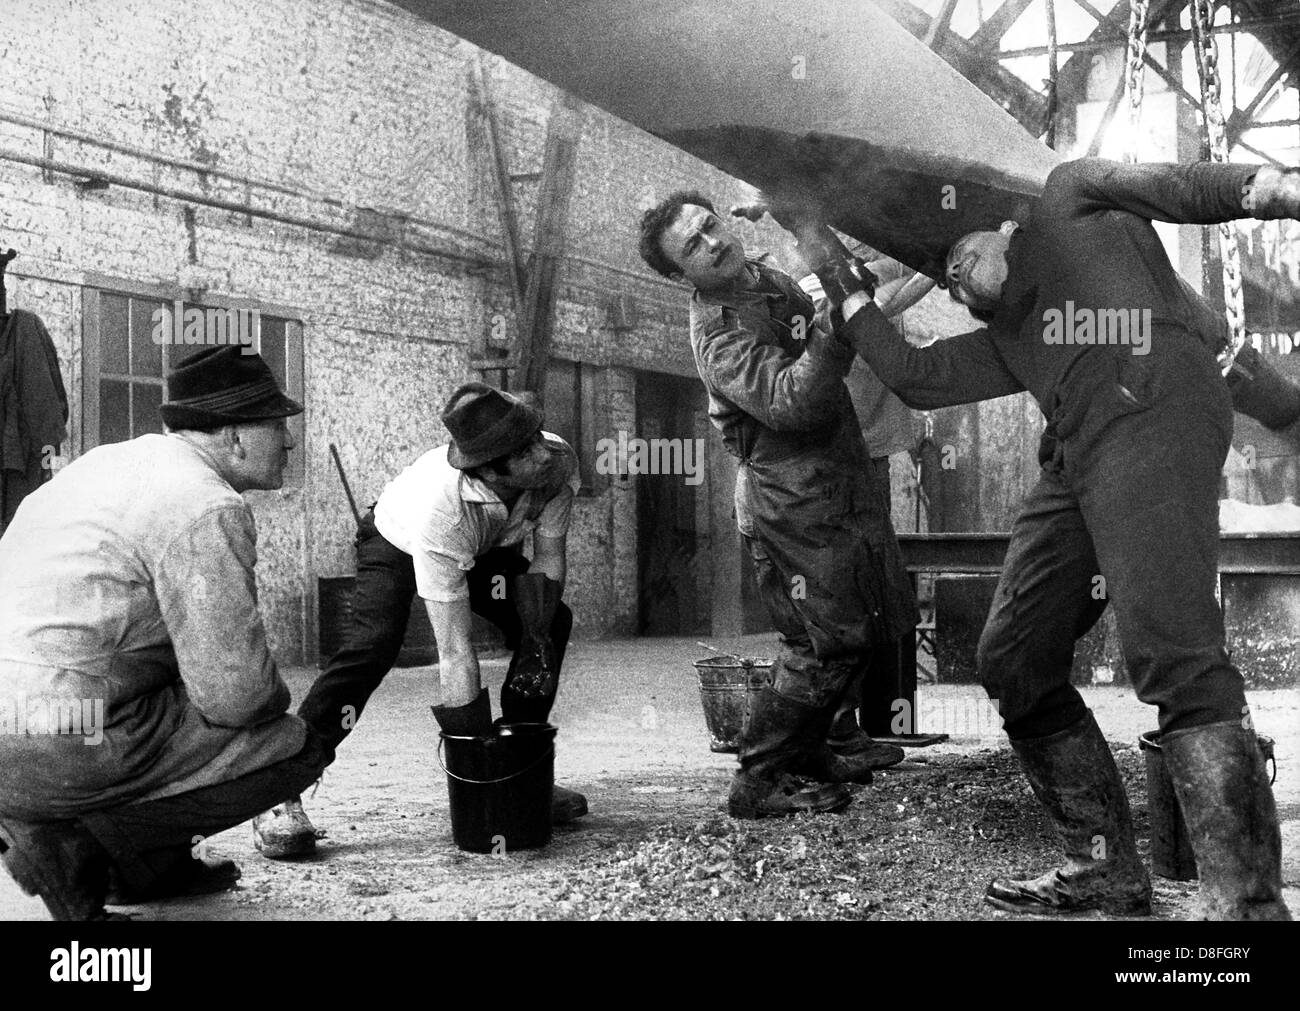 Gastarbeiter from Greece, Turkey and Spain work in a galvanization factory in Berlin in 1966. Stock Photo